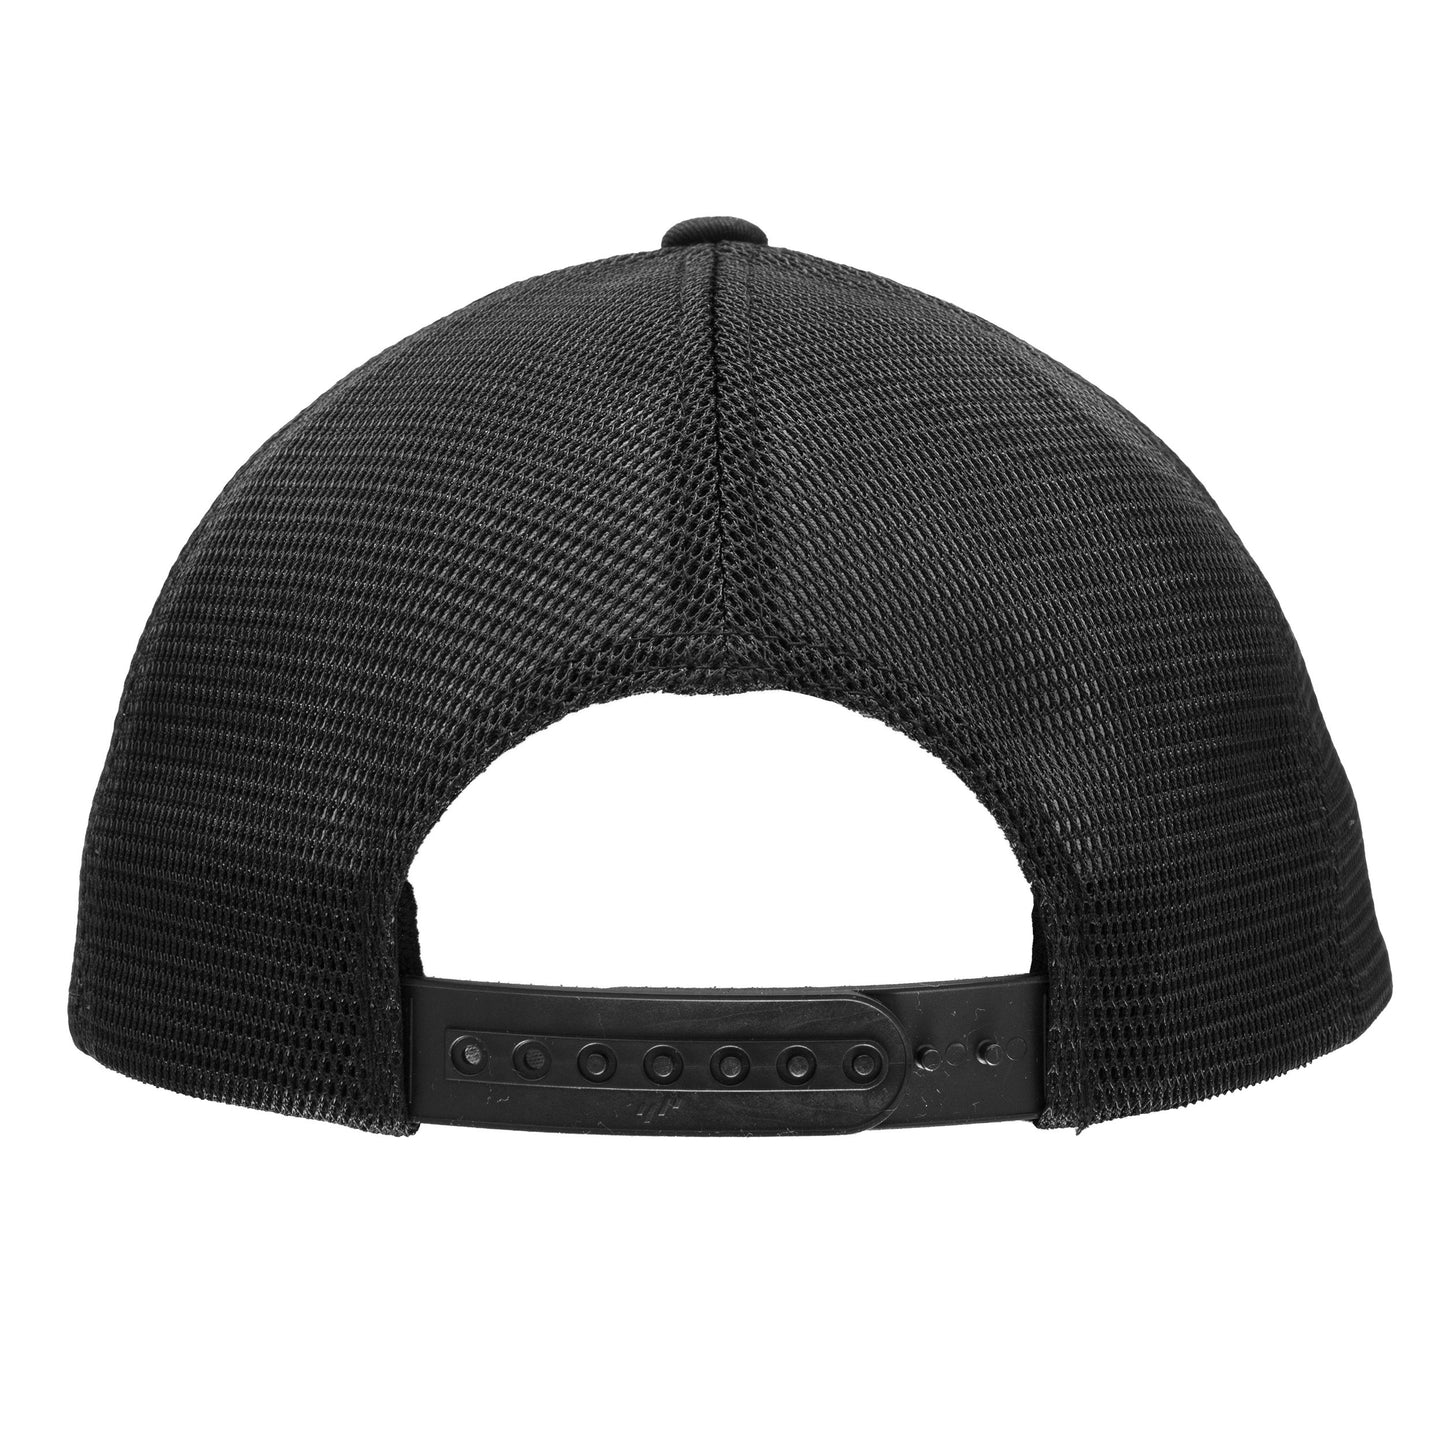 Flexpad Black Trucker Hat